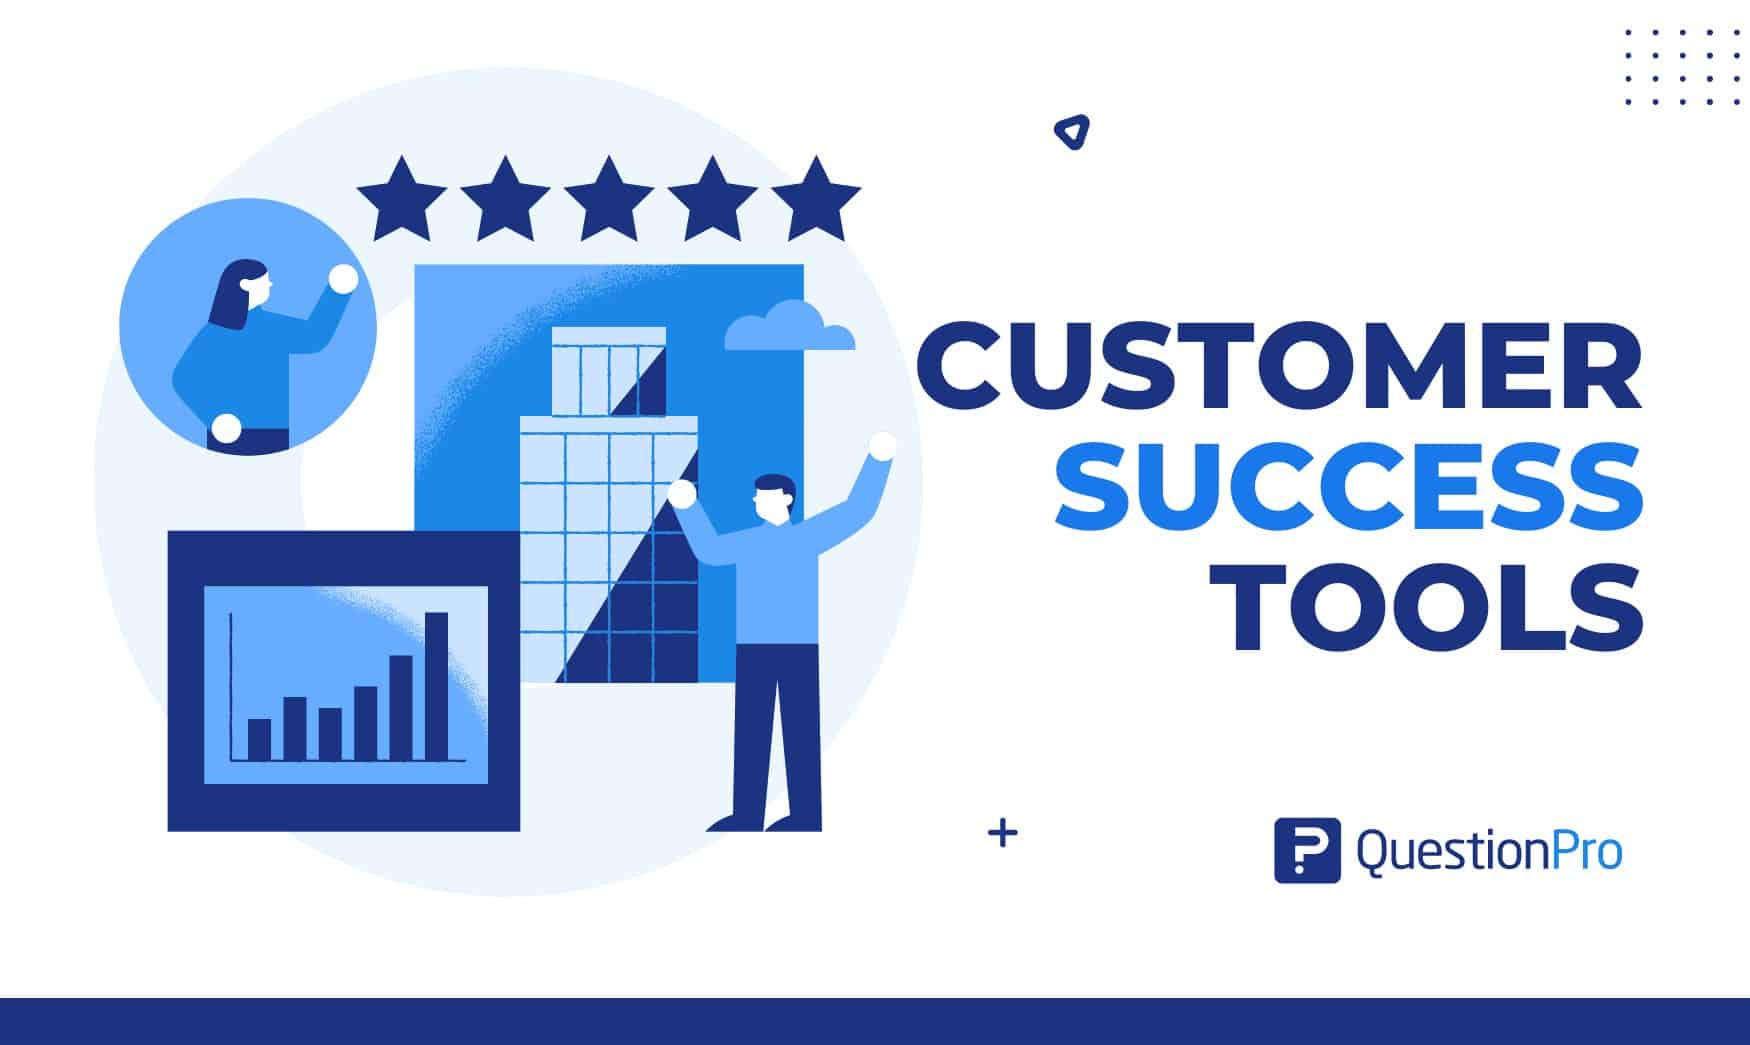 Customer success tools